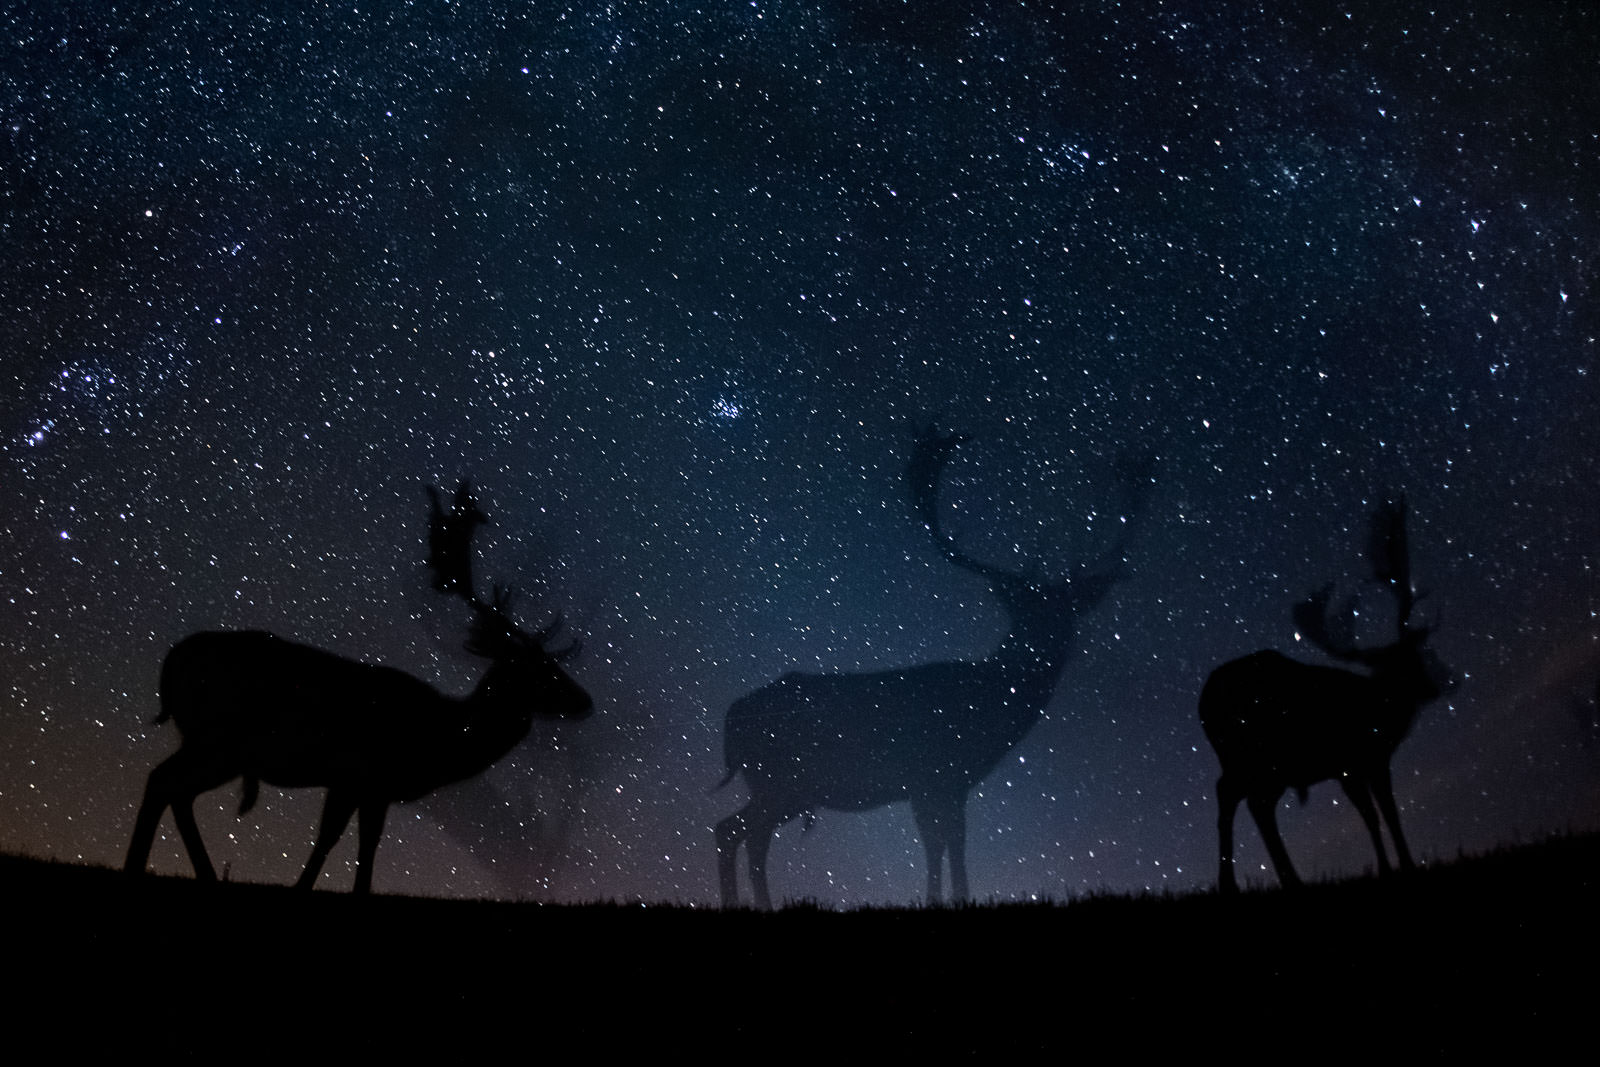 Starry night / Bence Mate / Nature TTL photographer contest winners